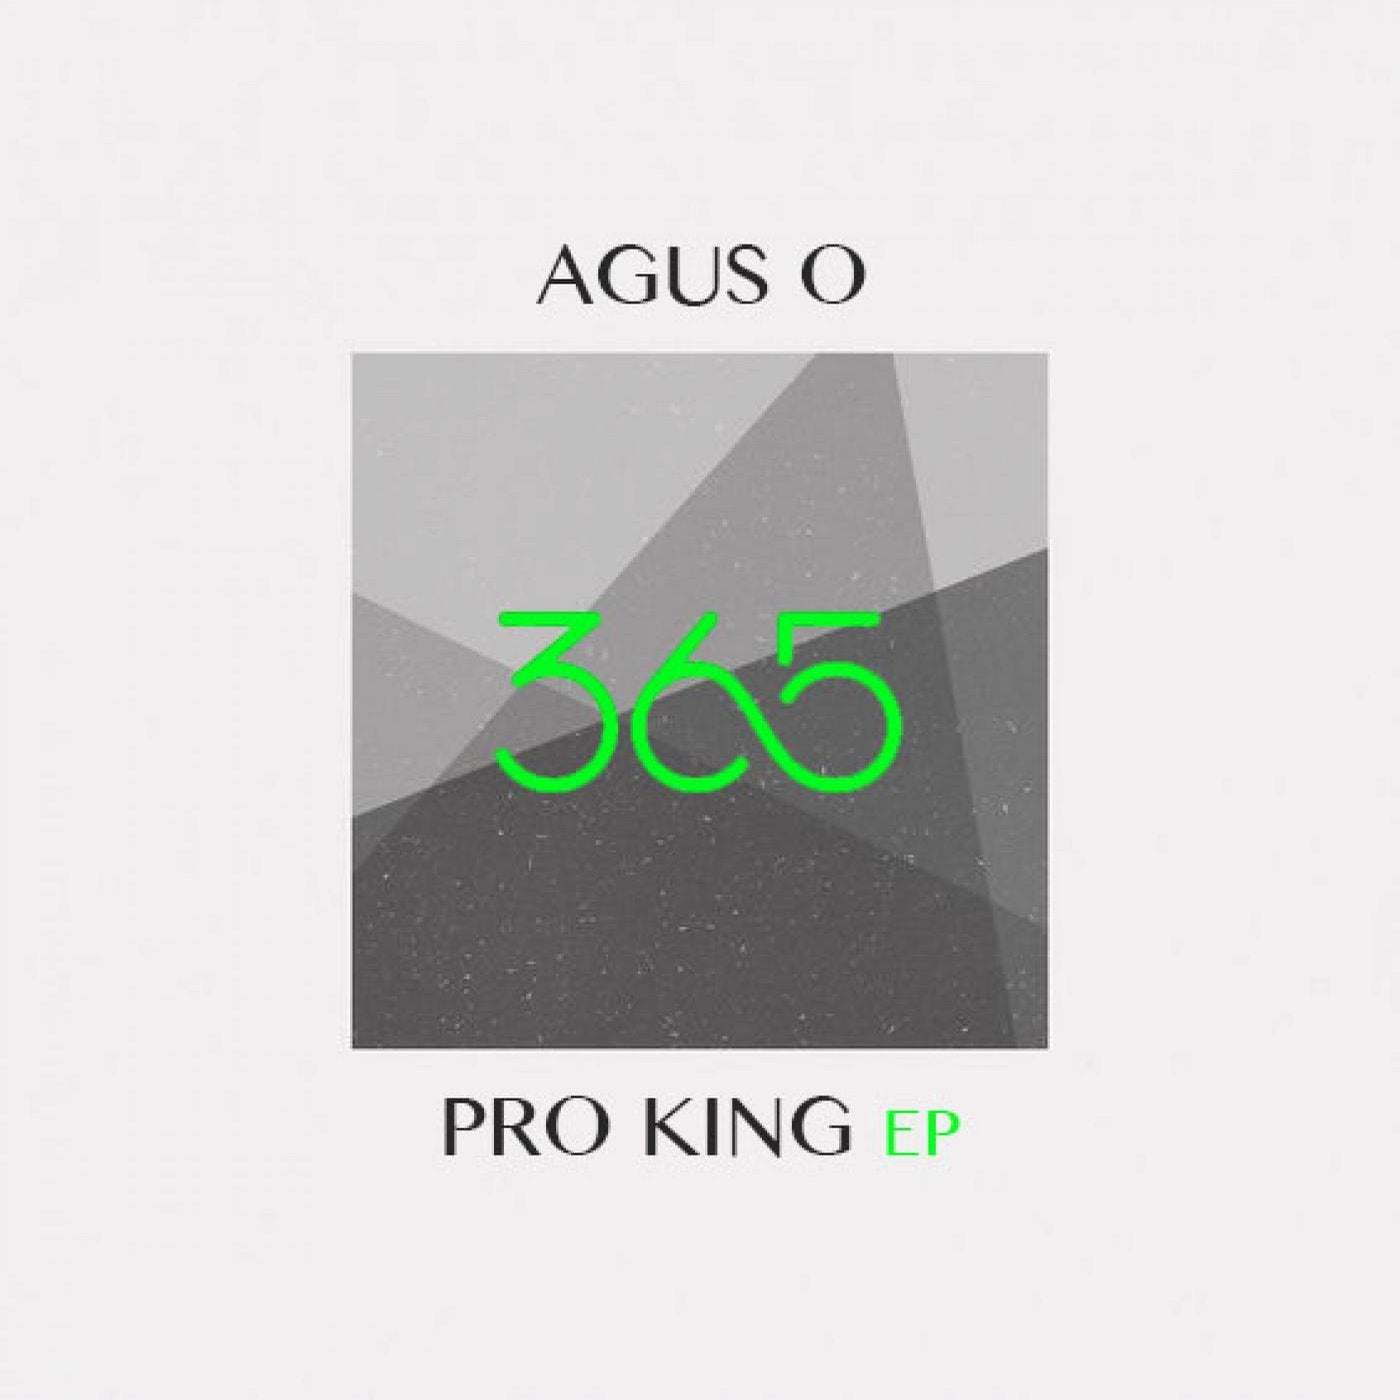 Agus O music download - Beatport